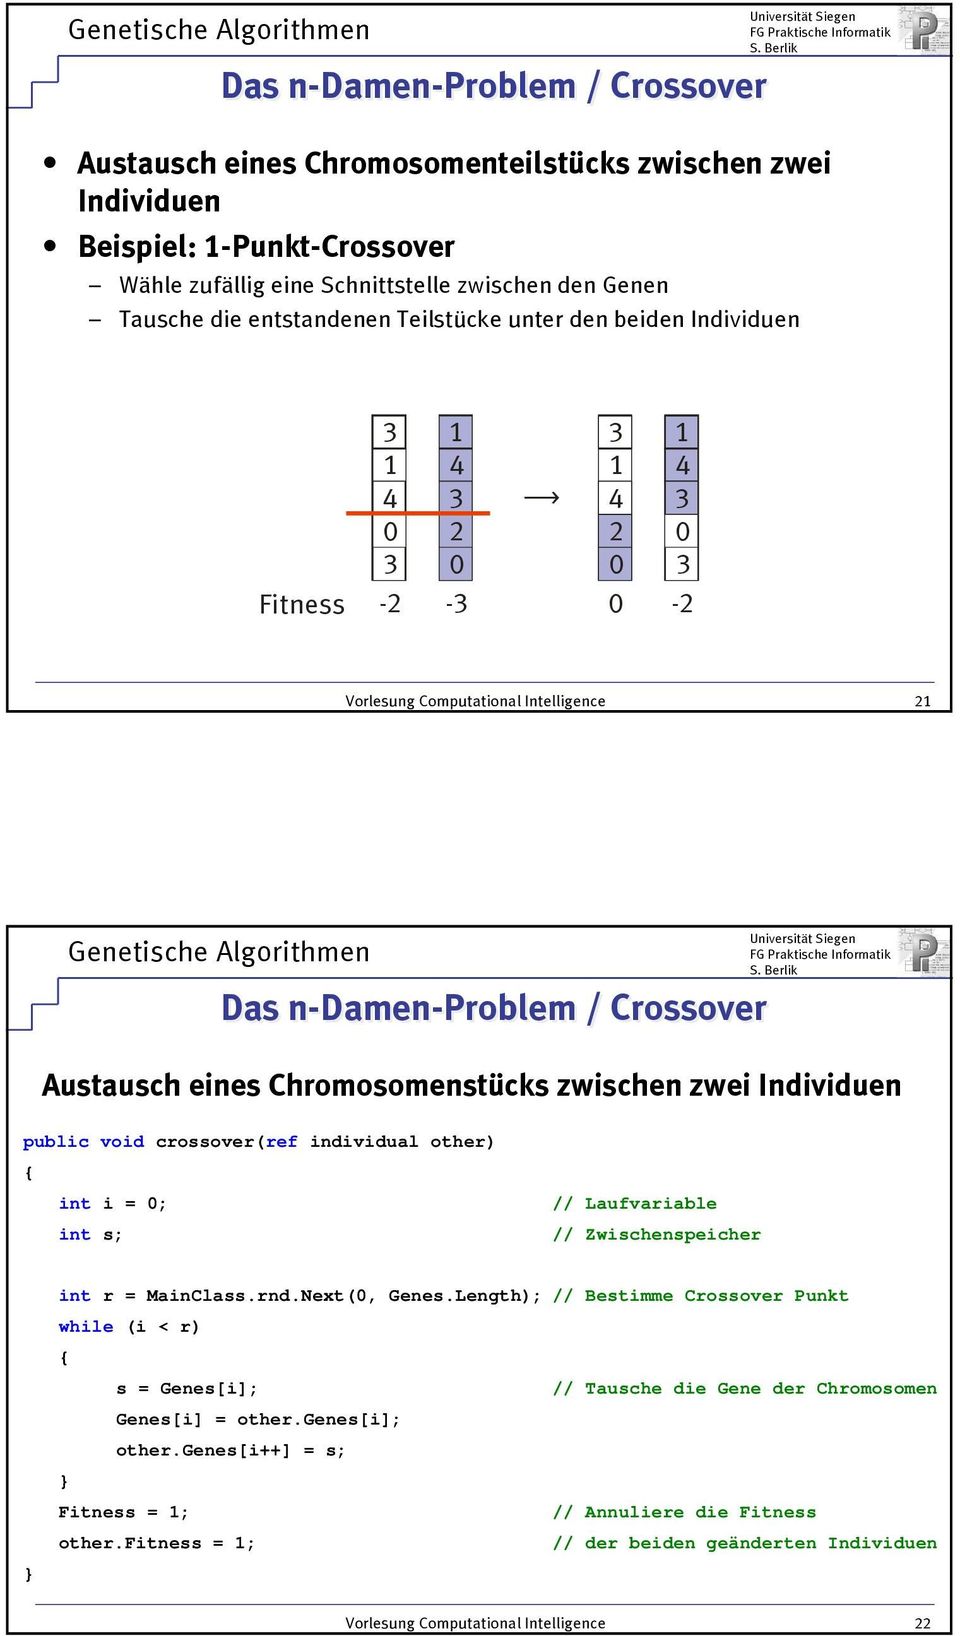 public void crossover(ref individual other) int i = 0; int s; // Laufvariable // Zwischenspeicher int r = MainClass.rnd.Next(0, Genes.